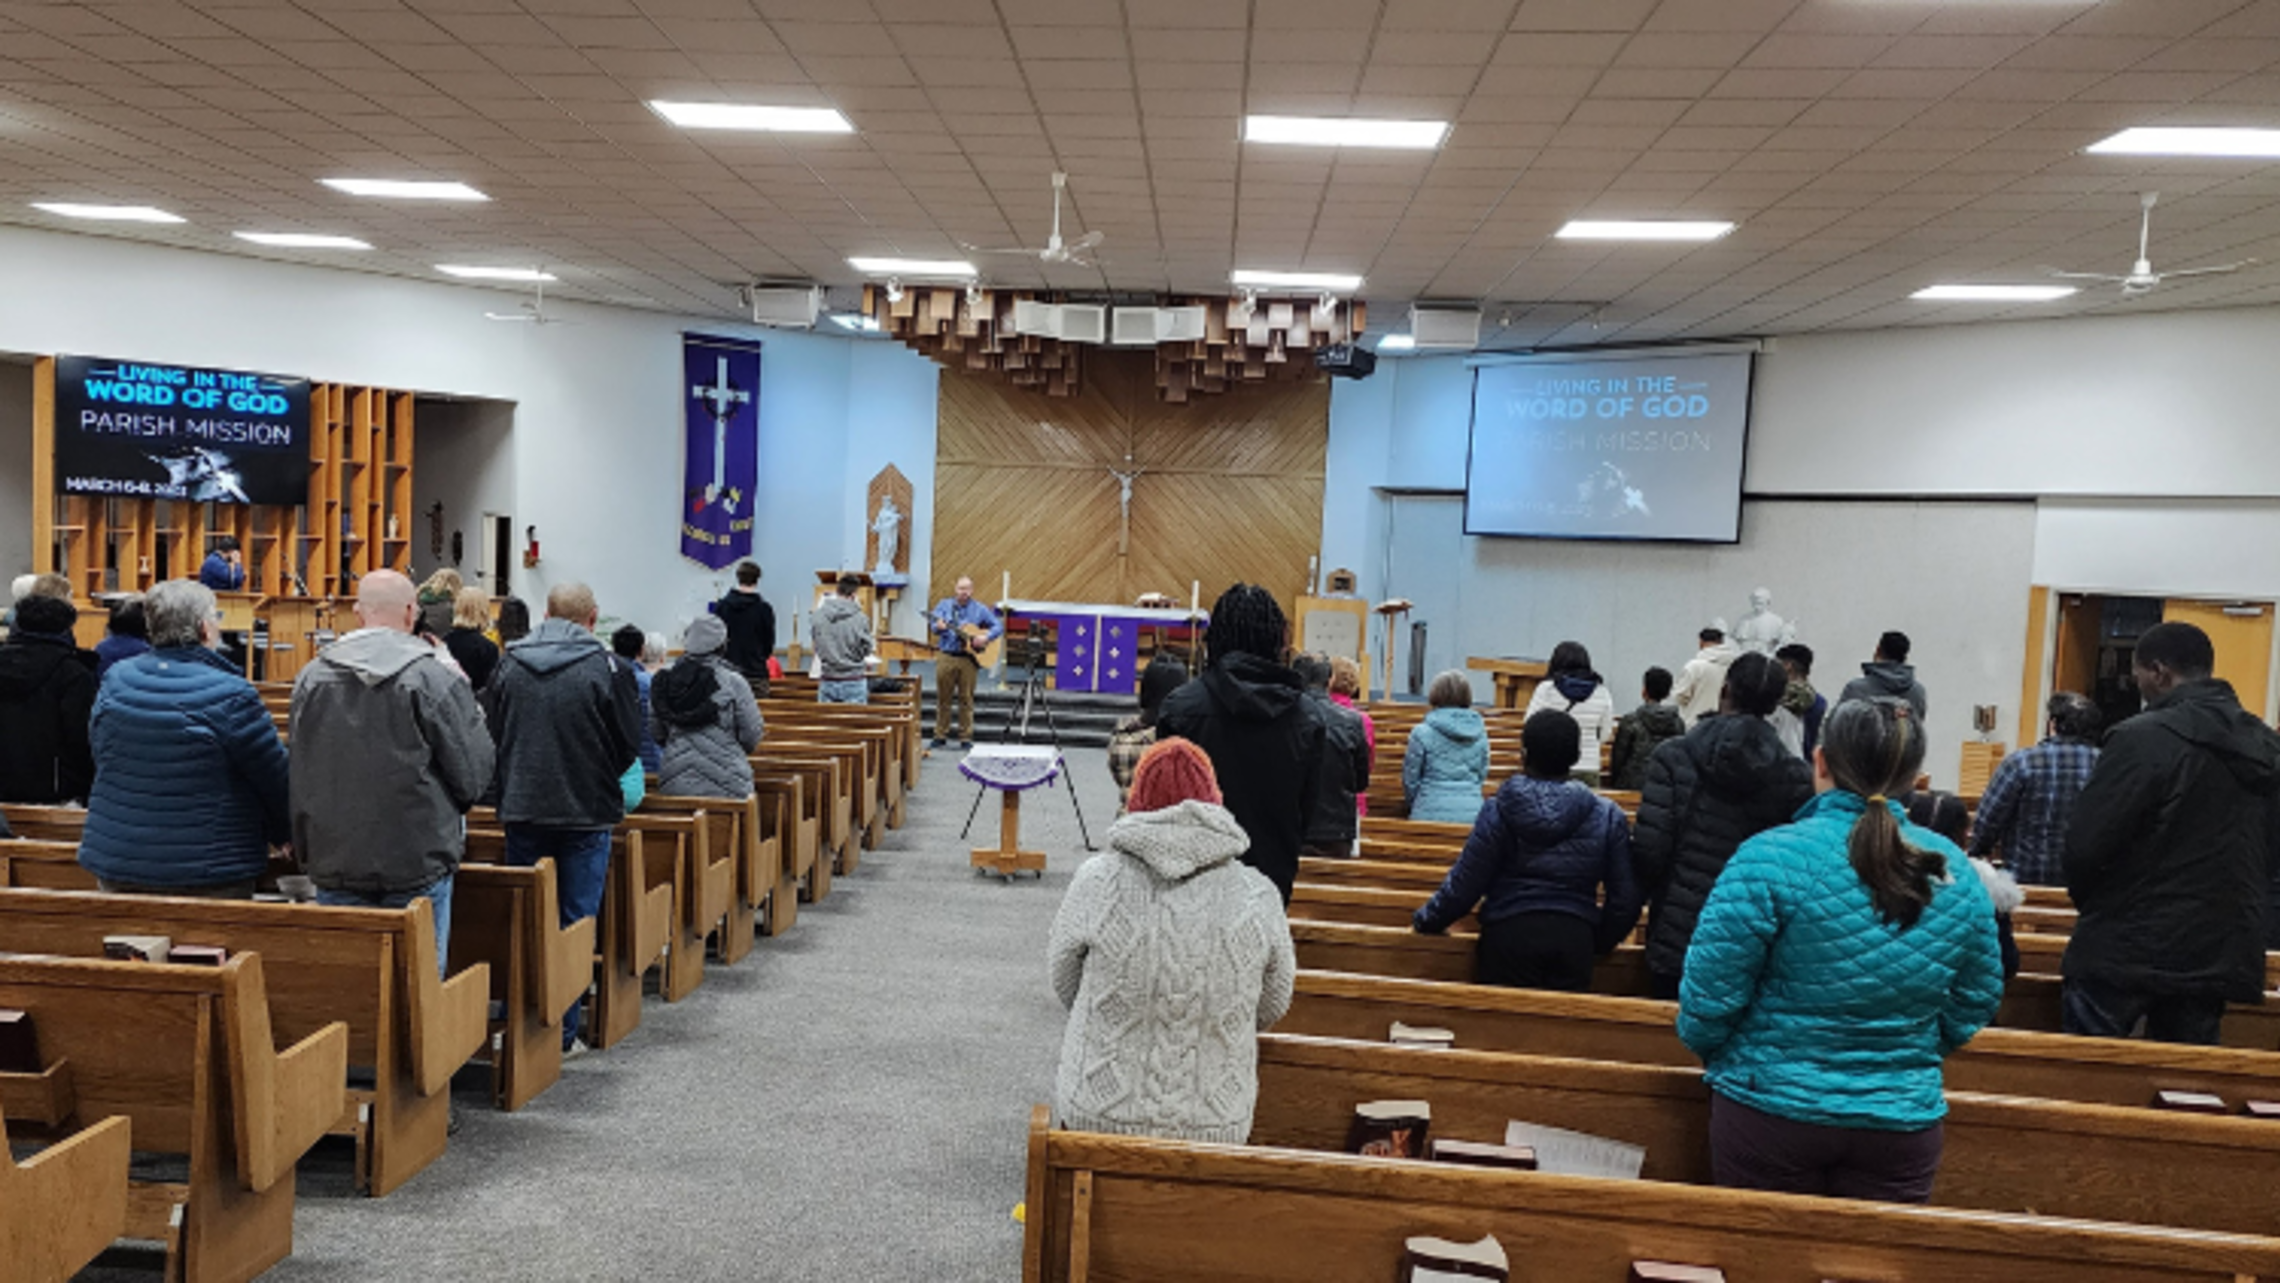 Lenten Mission in Edmonton